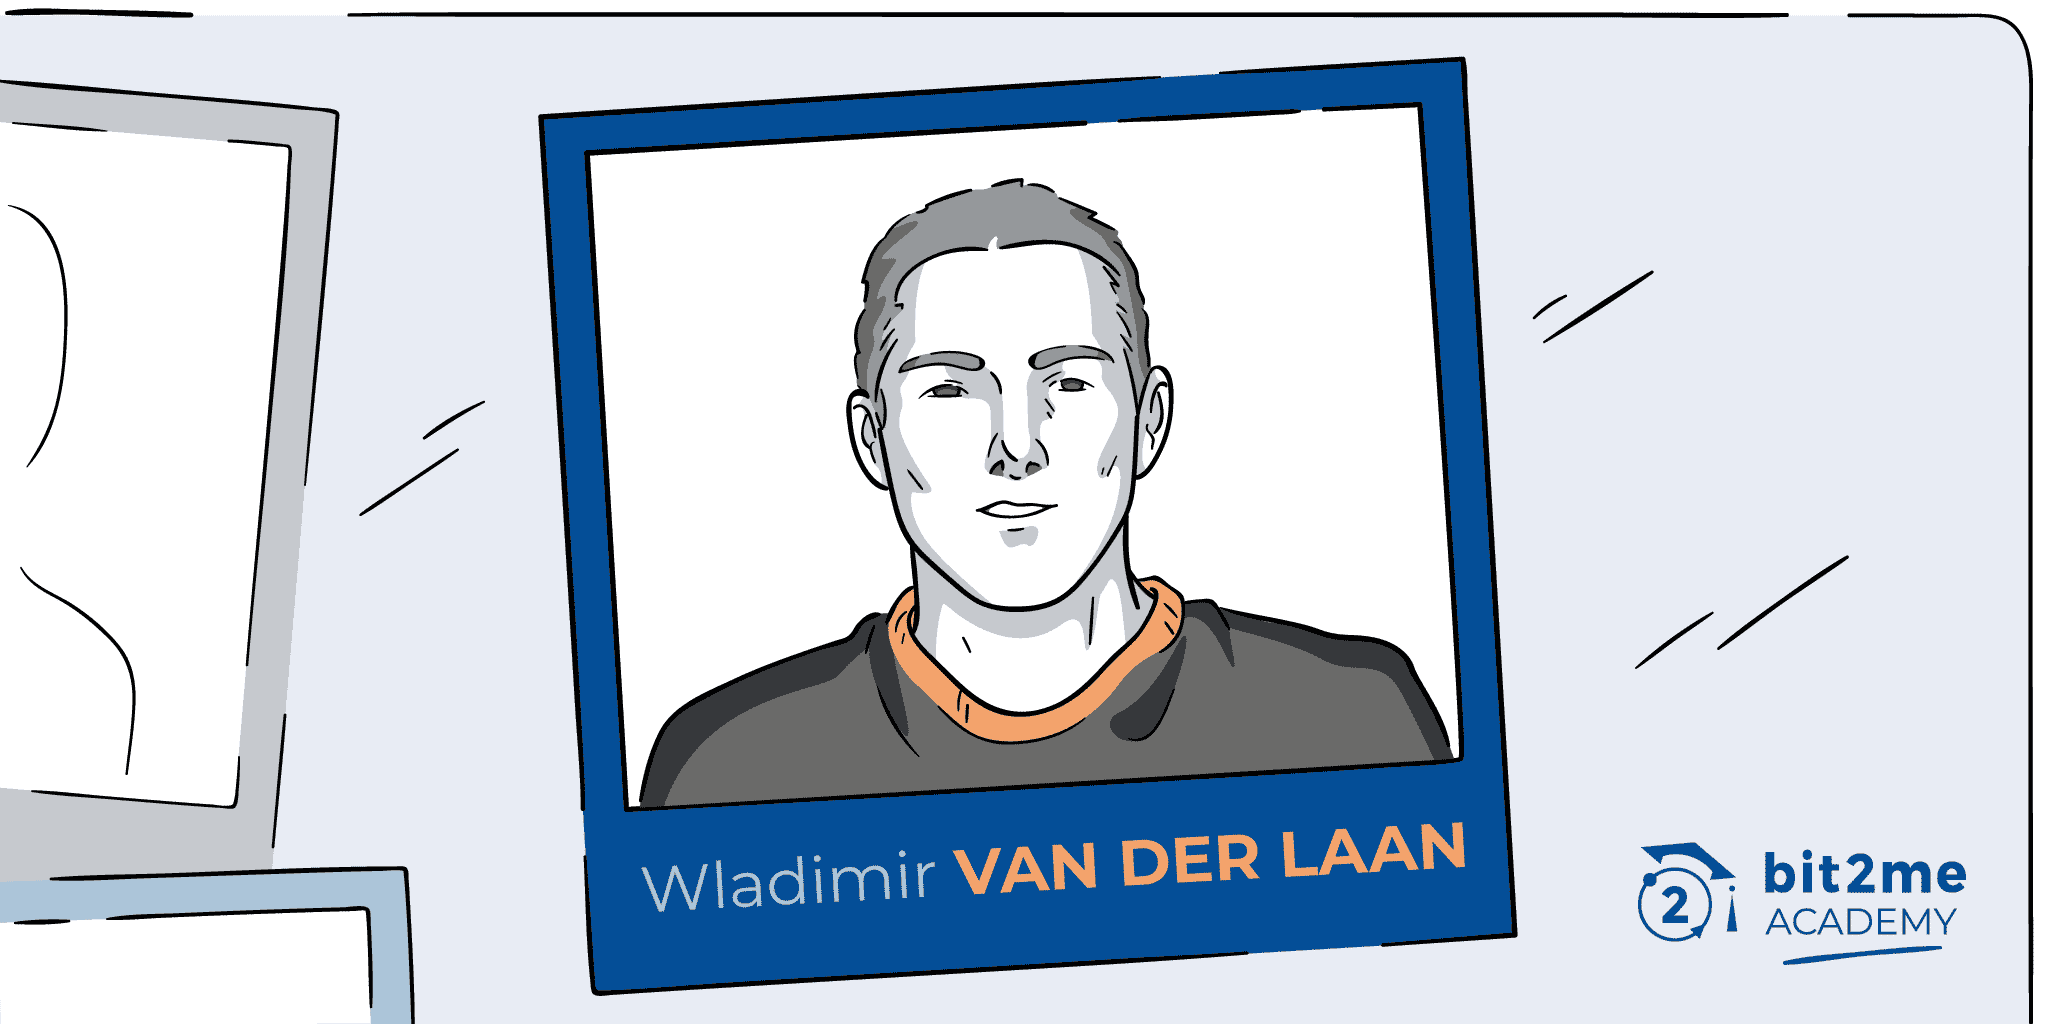 quien es Wladimir Van der Laan, quien es leader developer bitcoin